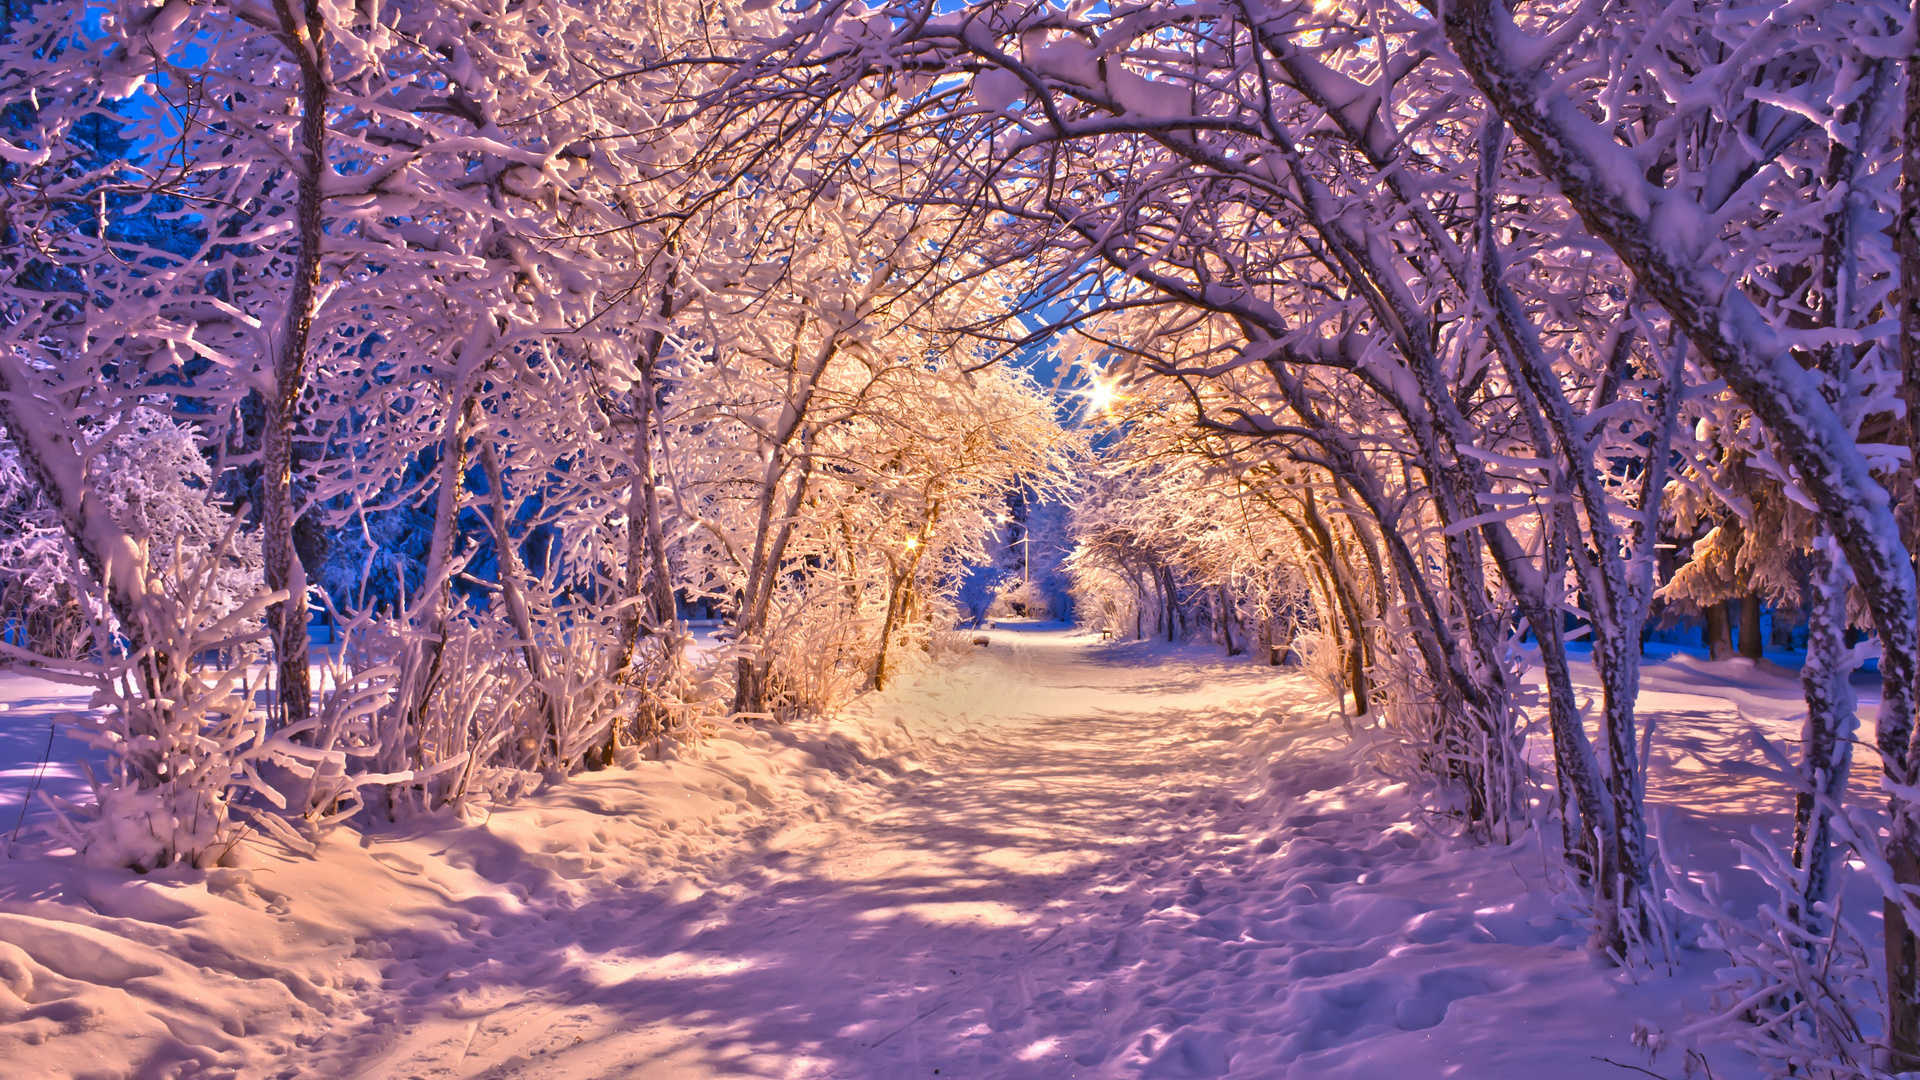 nature landscapes winter snow christmas sidewalk roads lights white